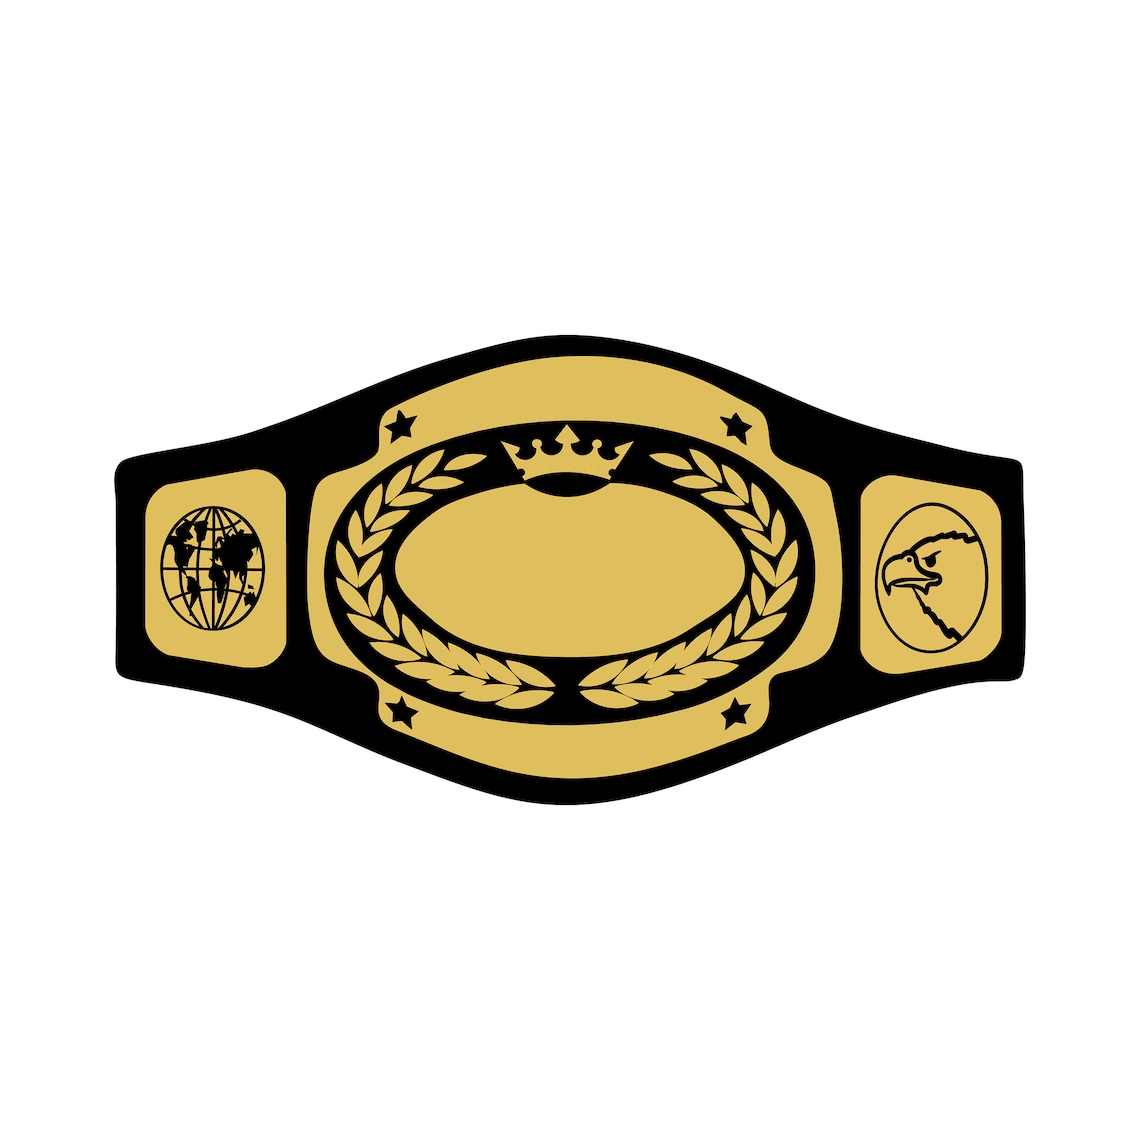 Golden Boxing Belt Silhouette and Cricut Cut Files Jpeg - Etsy